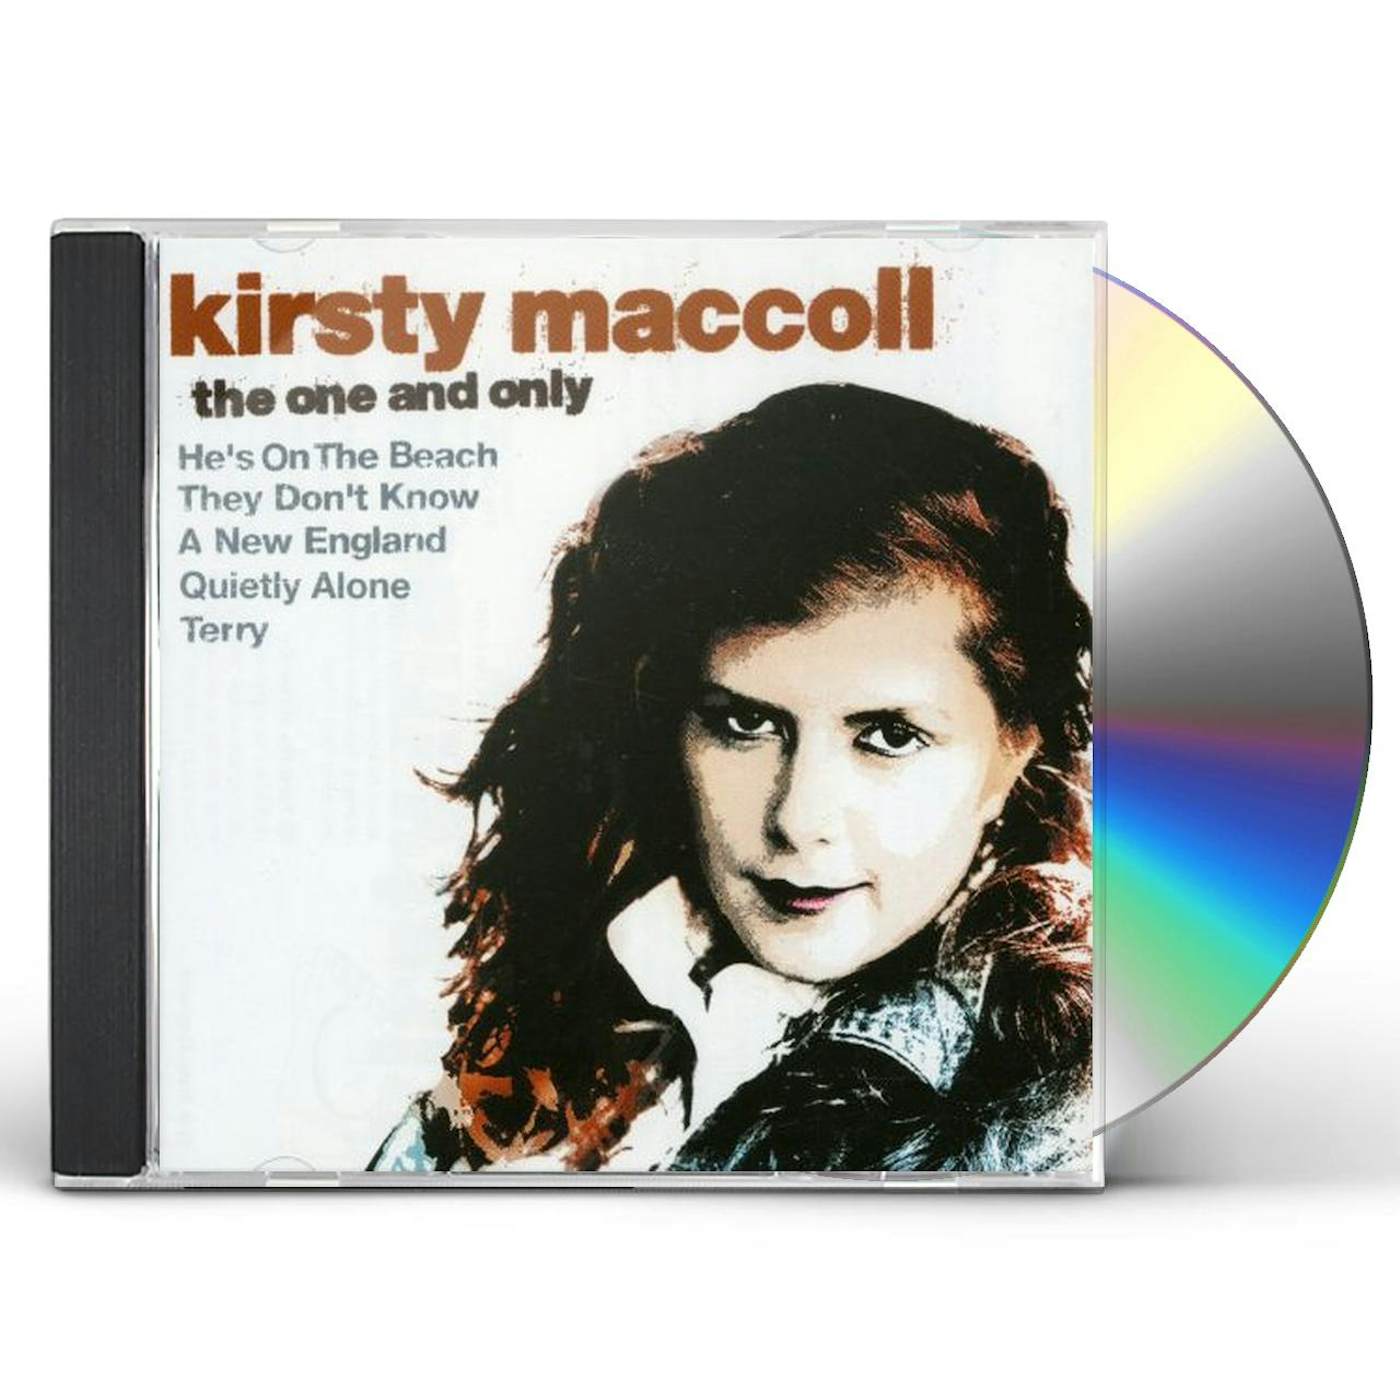 Free World (CD single) - Kirsty MacColl